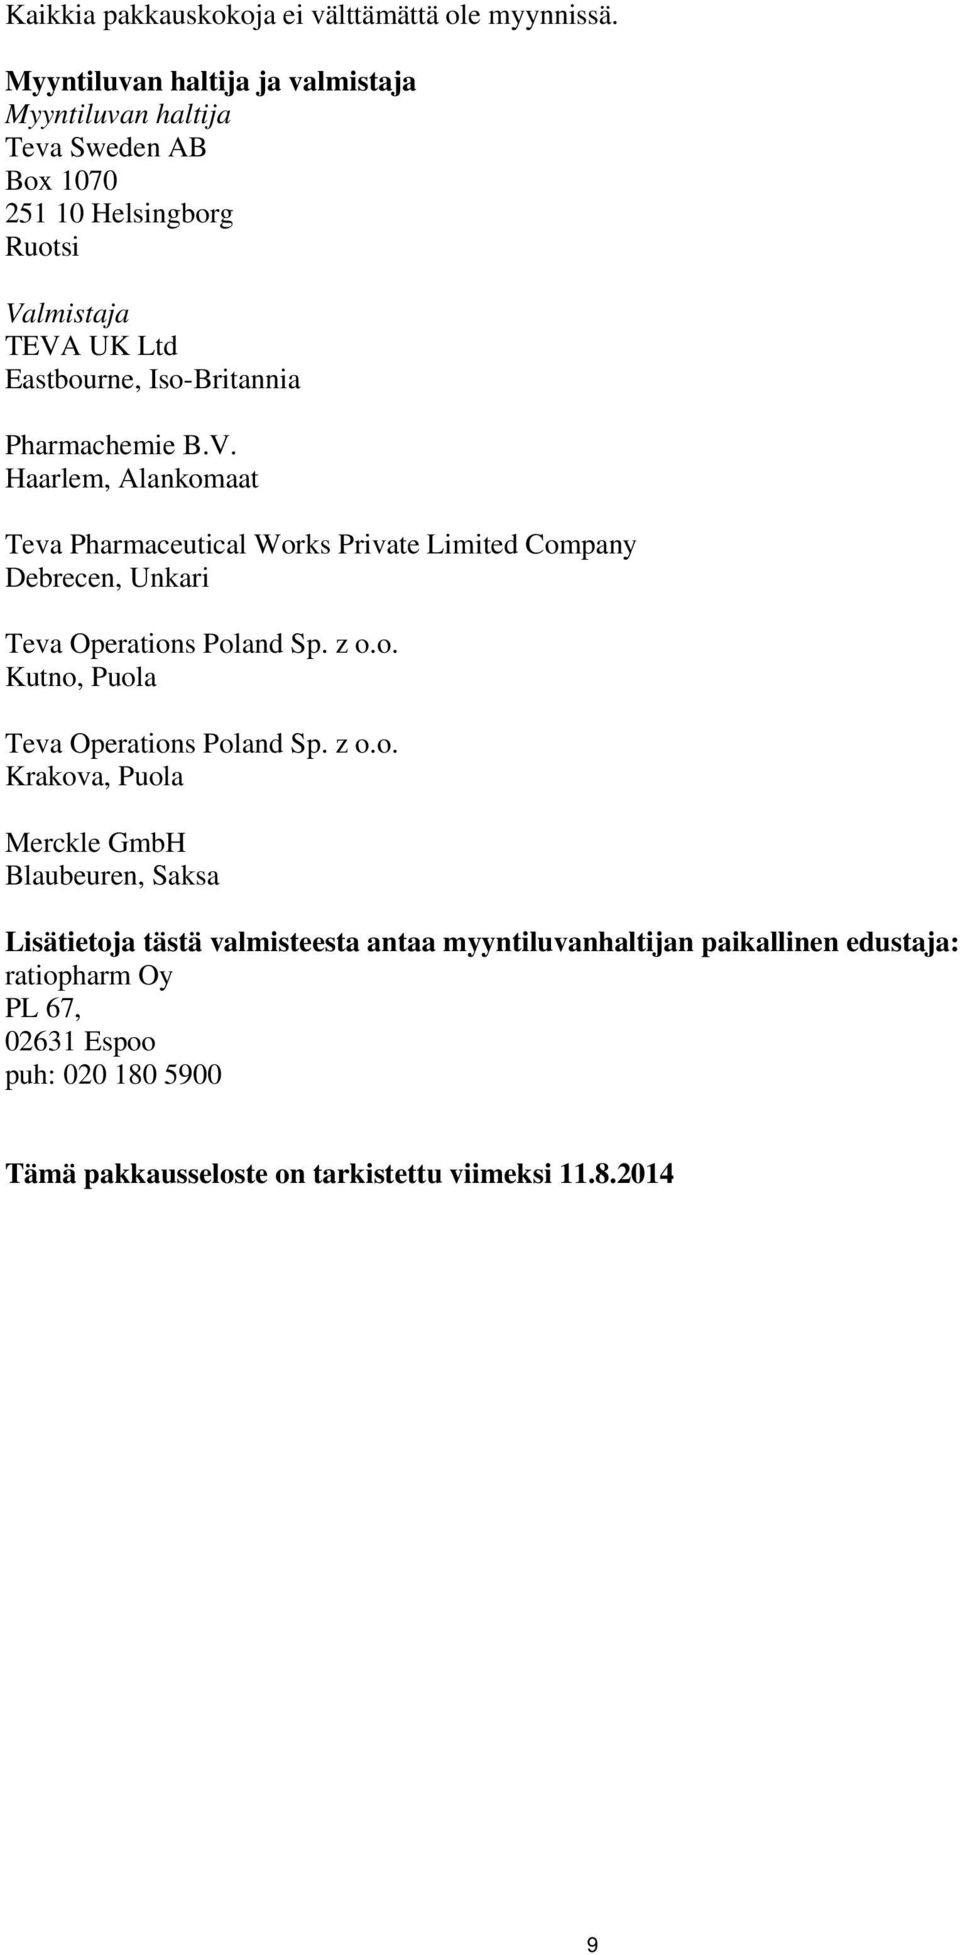 Pharmachemie B.V. Haarlem, Alankomaat Teva Pharmaceutical Works Private Limited Company Debrecen, Unkari Teva Operations Poland Sp. z o.o. Kutno, Puola Teva Operations Poland Sp.